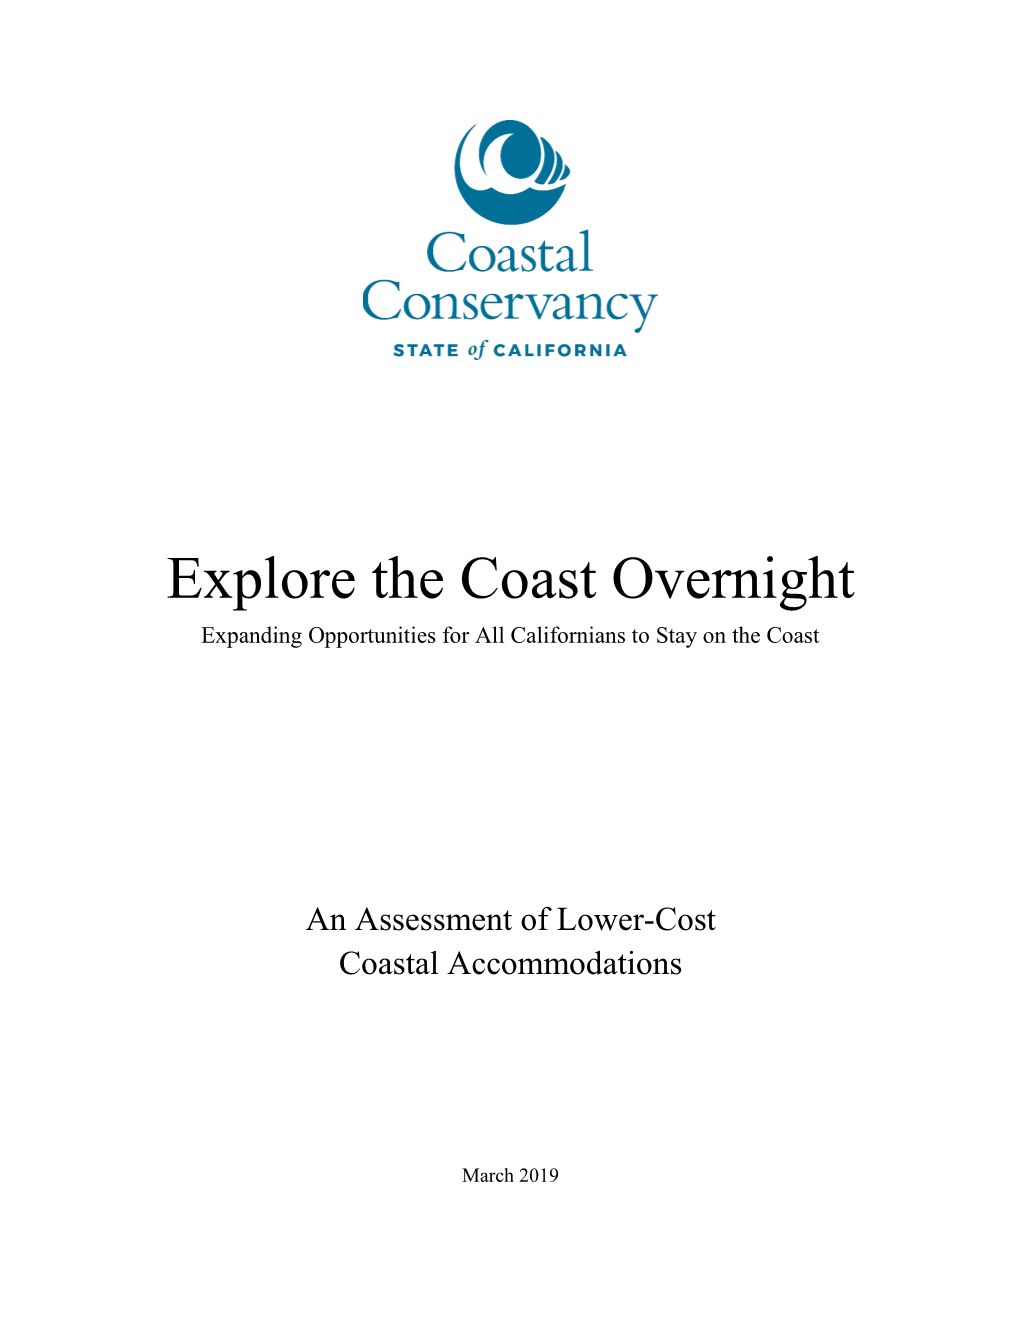 Explore the Coast Overnight Assessment